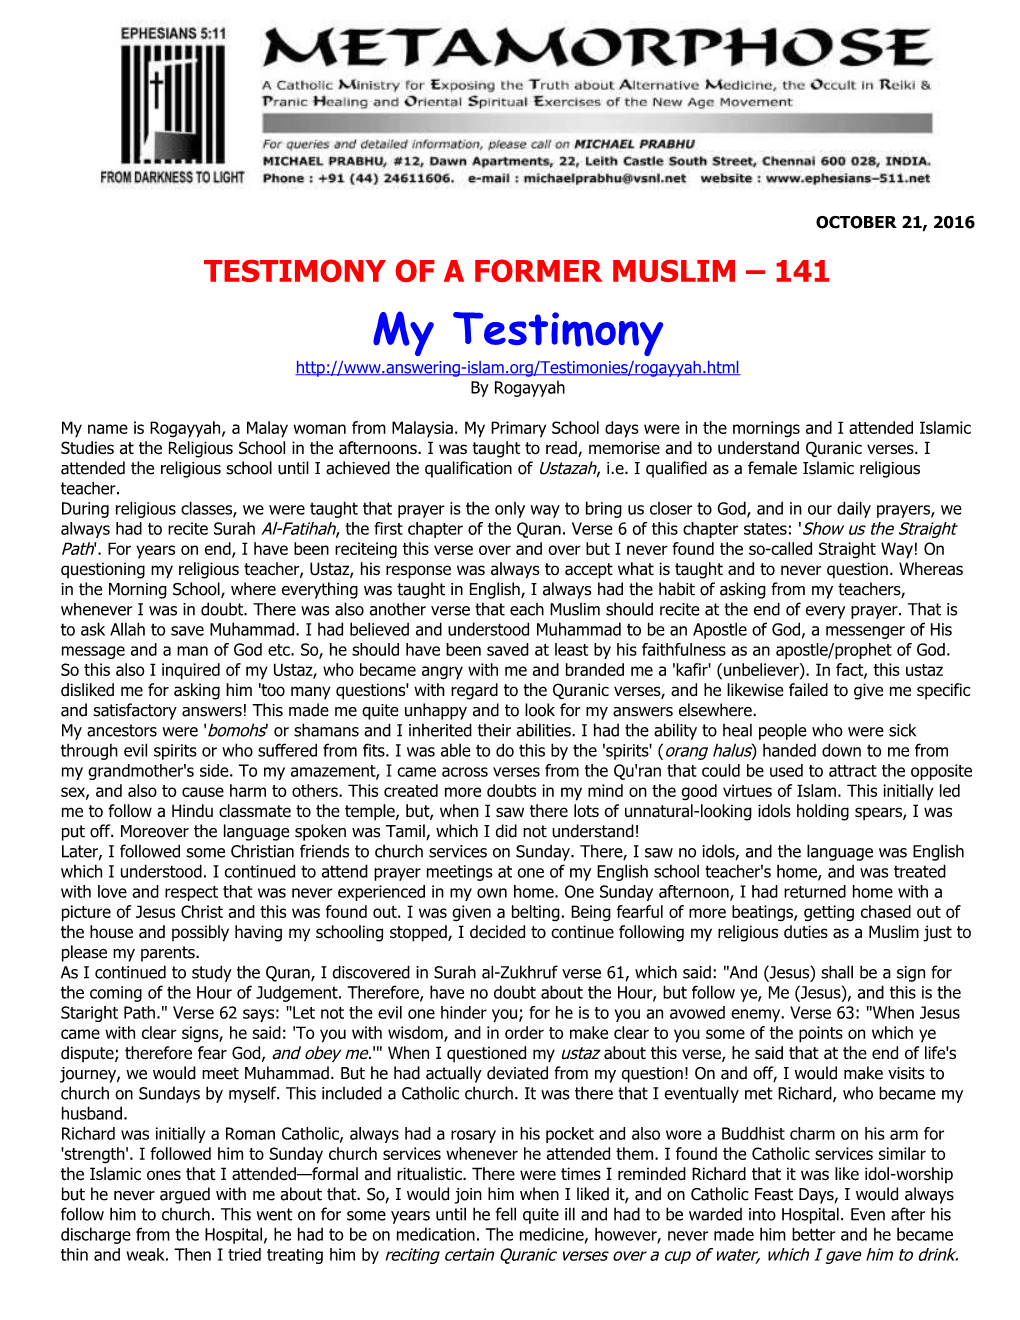 Testimony of a Former Muslim 141